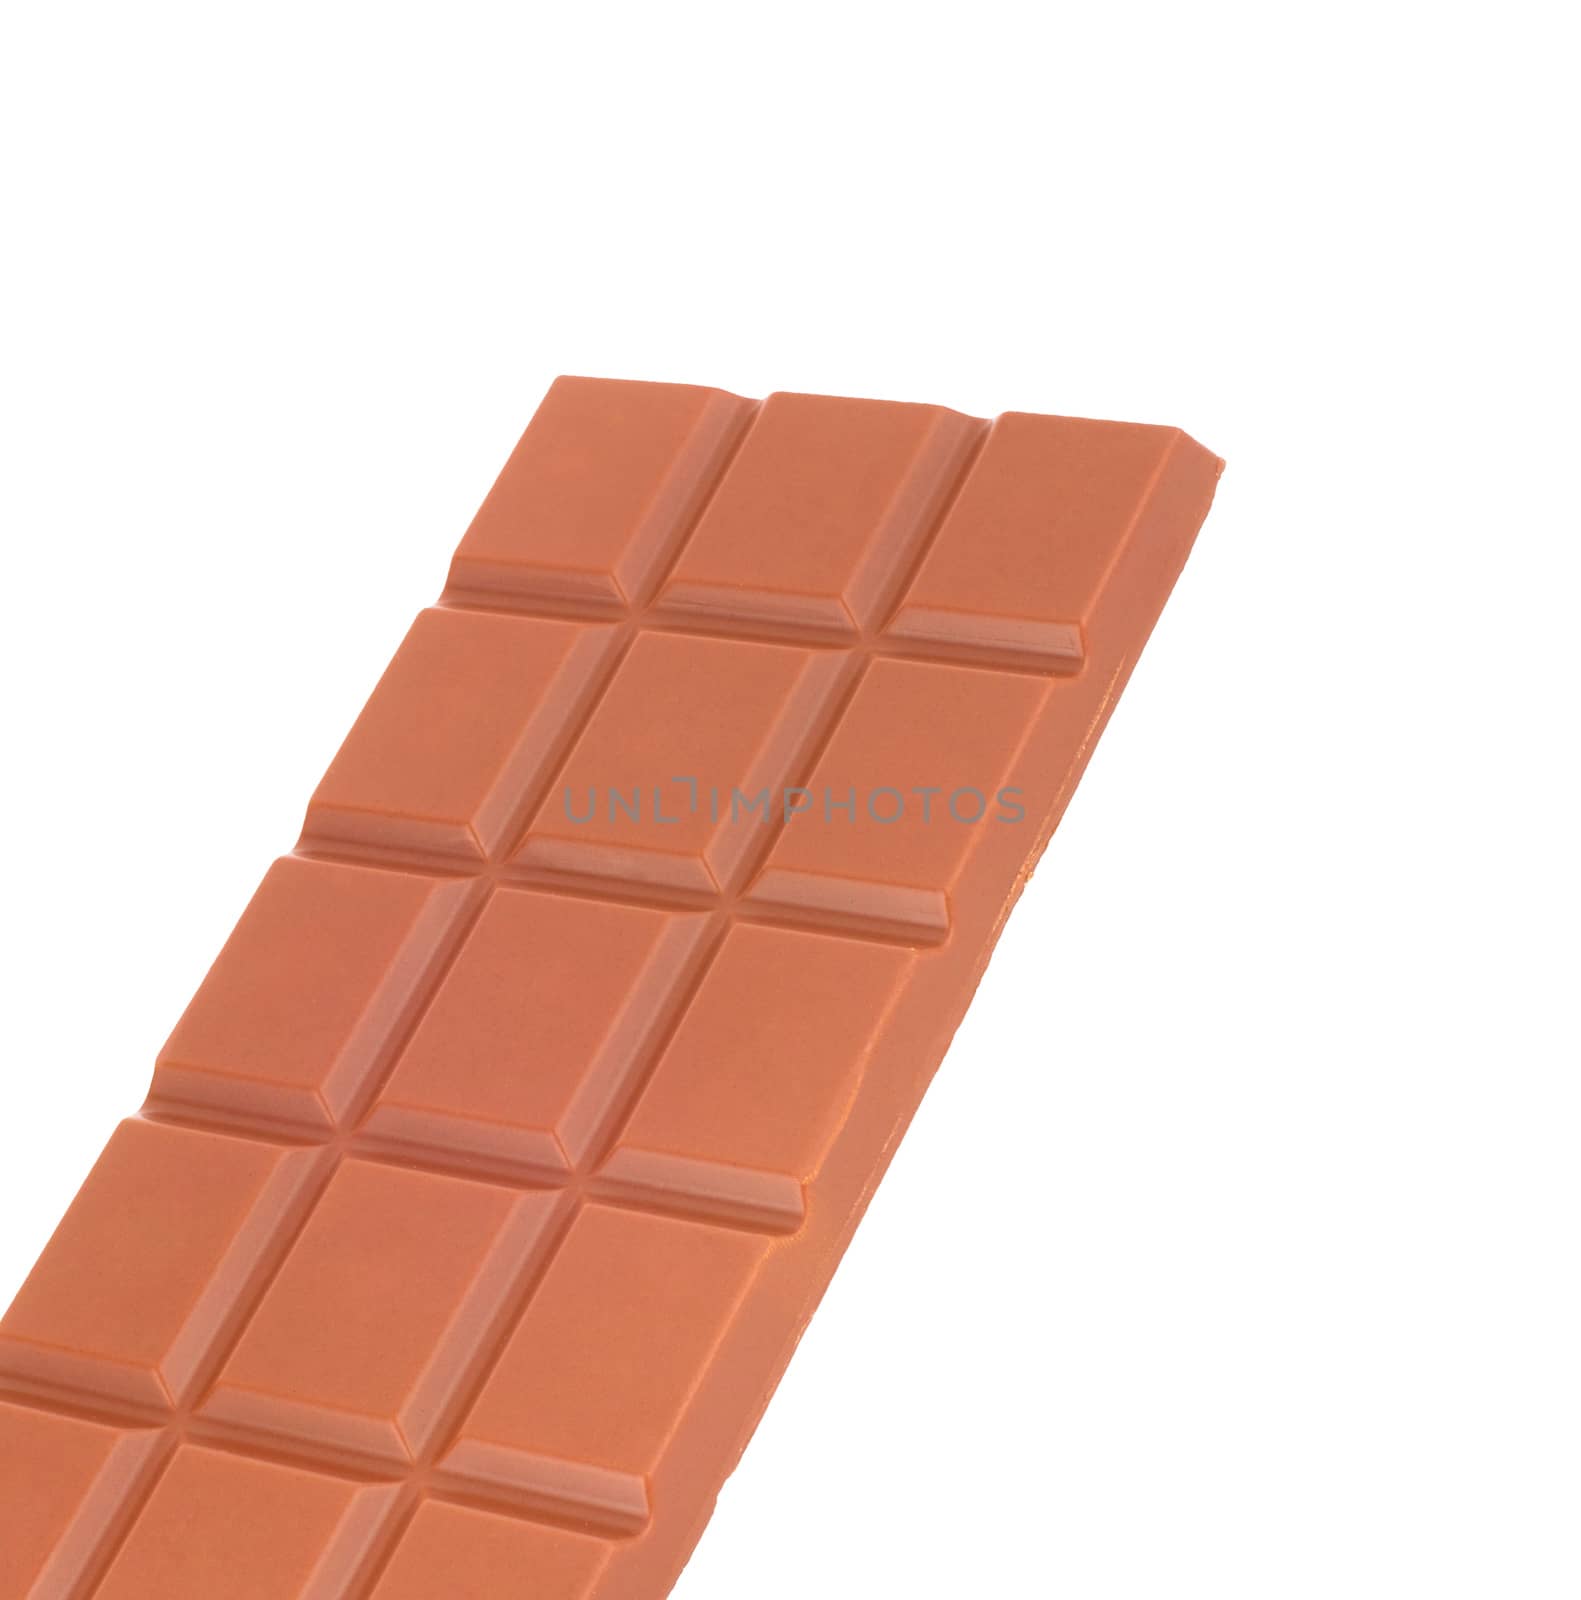 chocolate bars close up